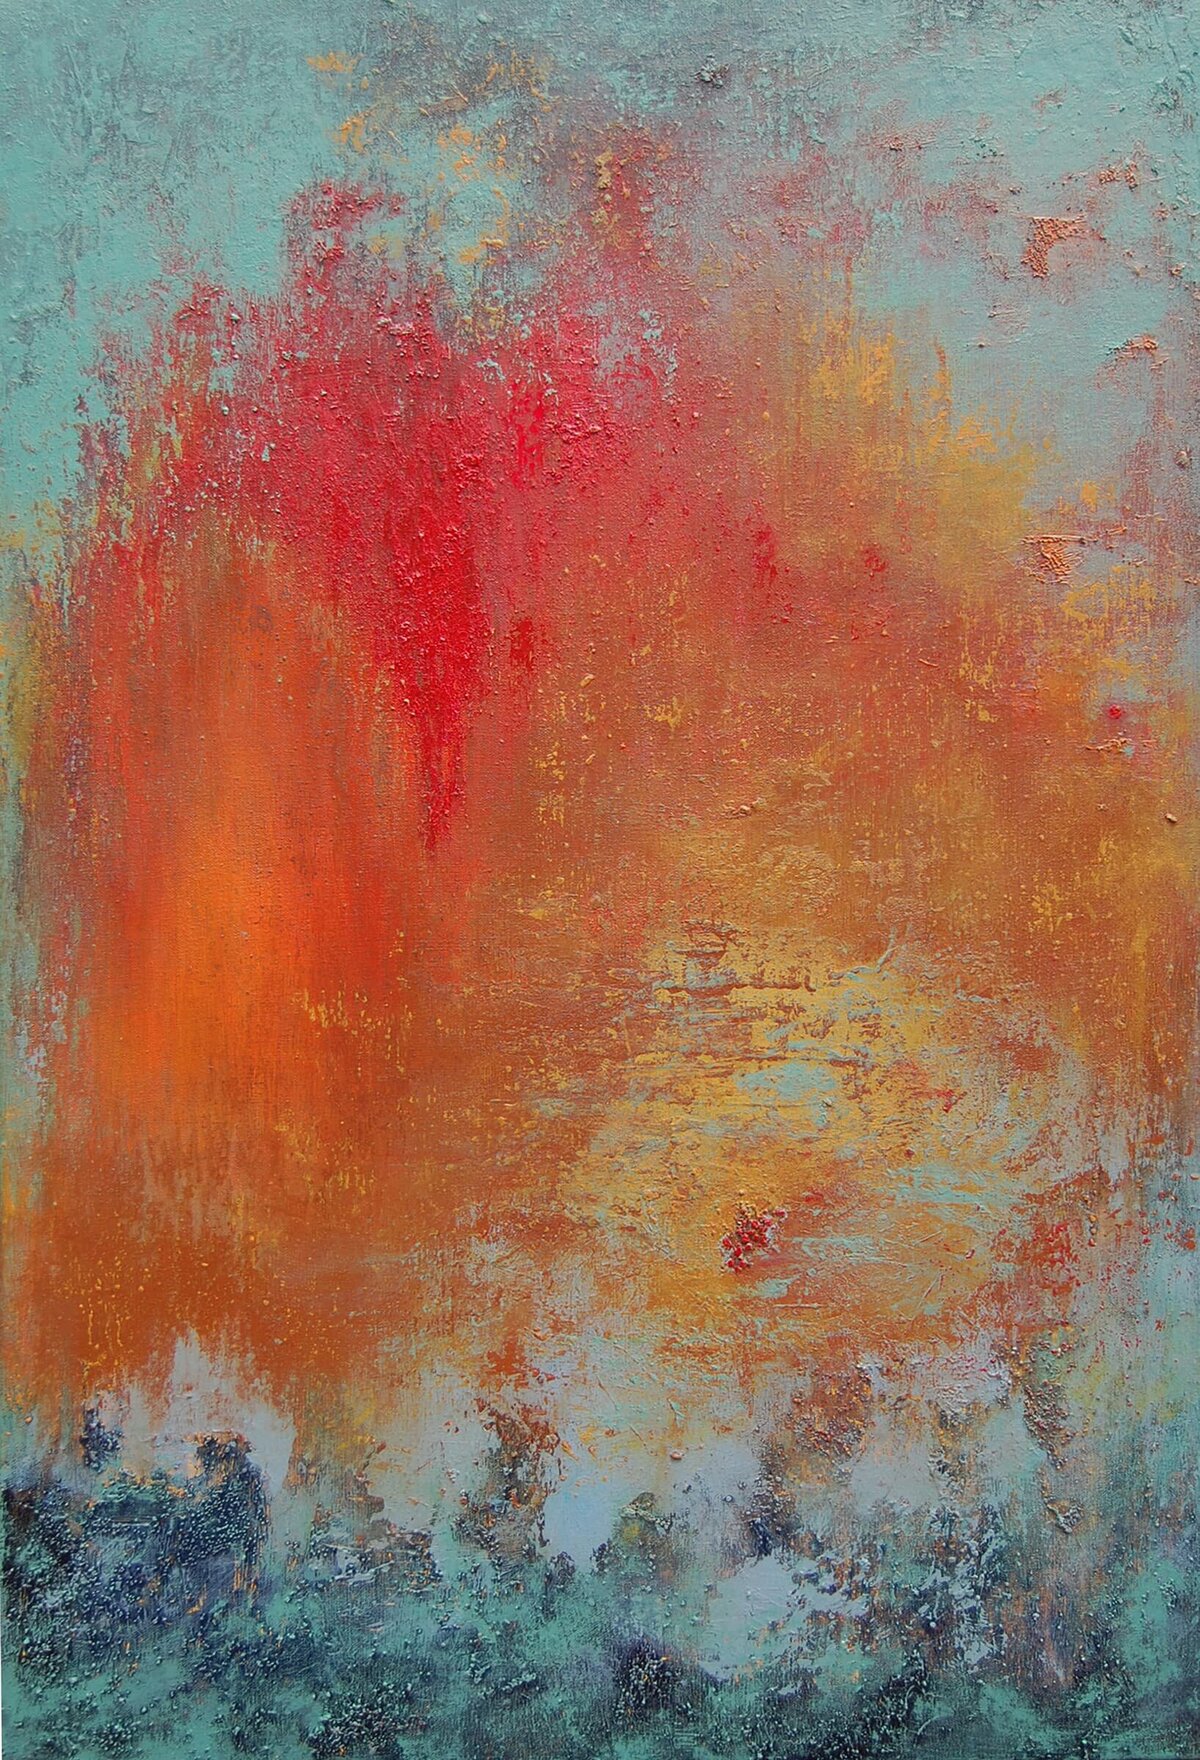 Andrea_Cermanski_Vermillion_Orange_Green_Turquoise_Abstract_Painting_on_Canvas